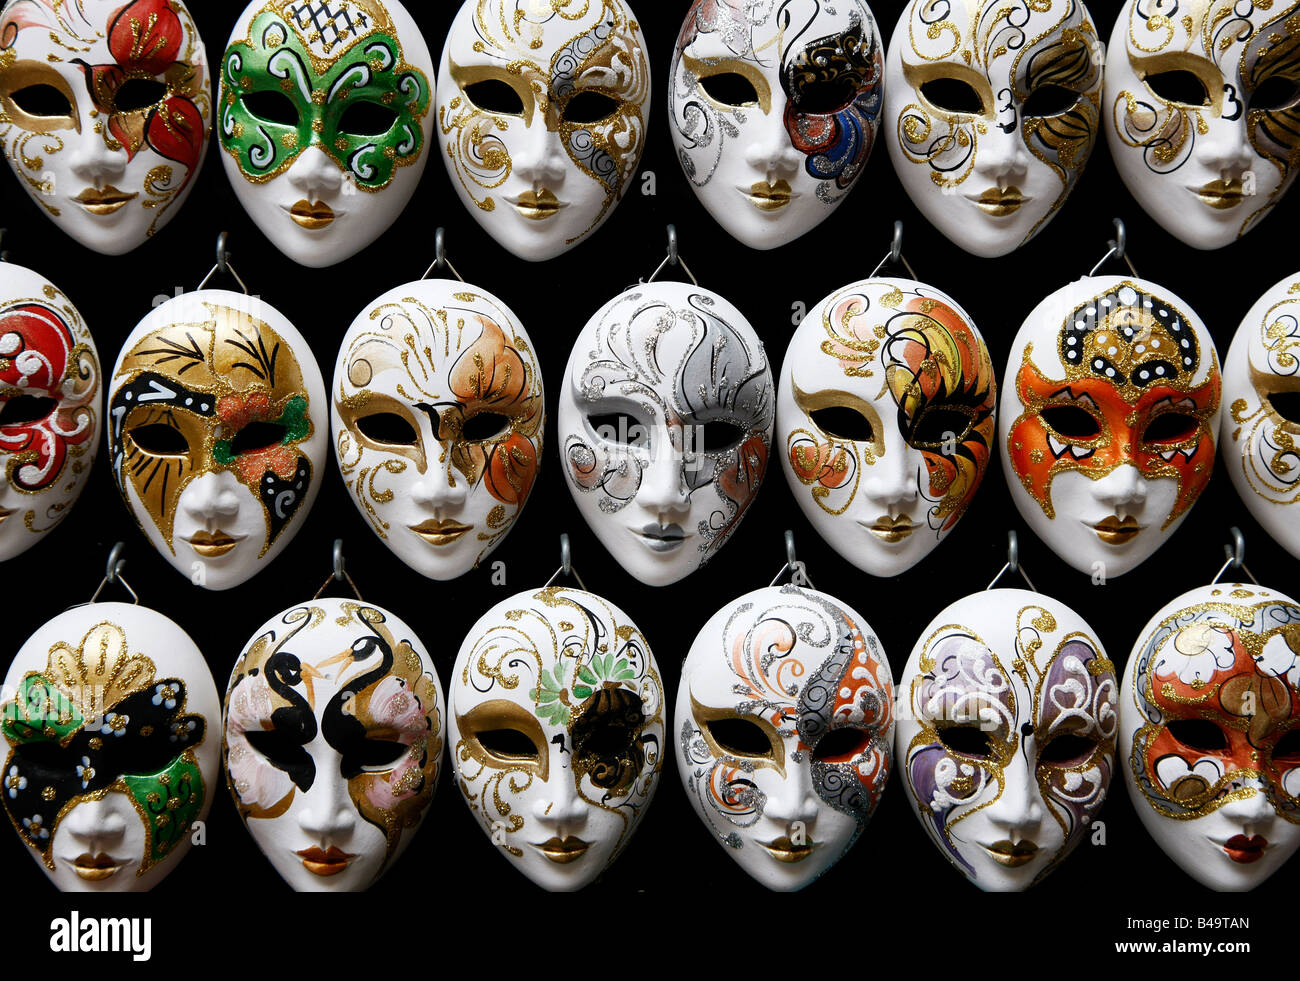 display of decorative venetian carnival masks Stock Photo - Alamy